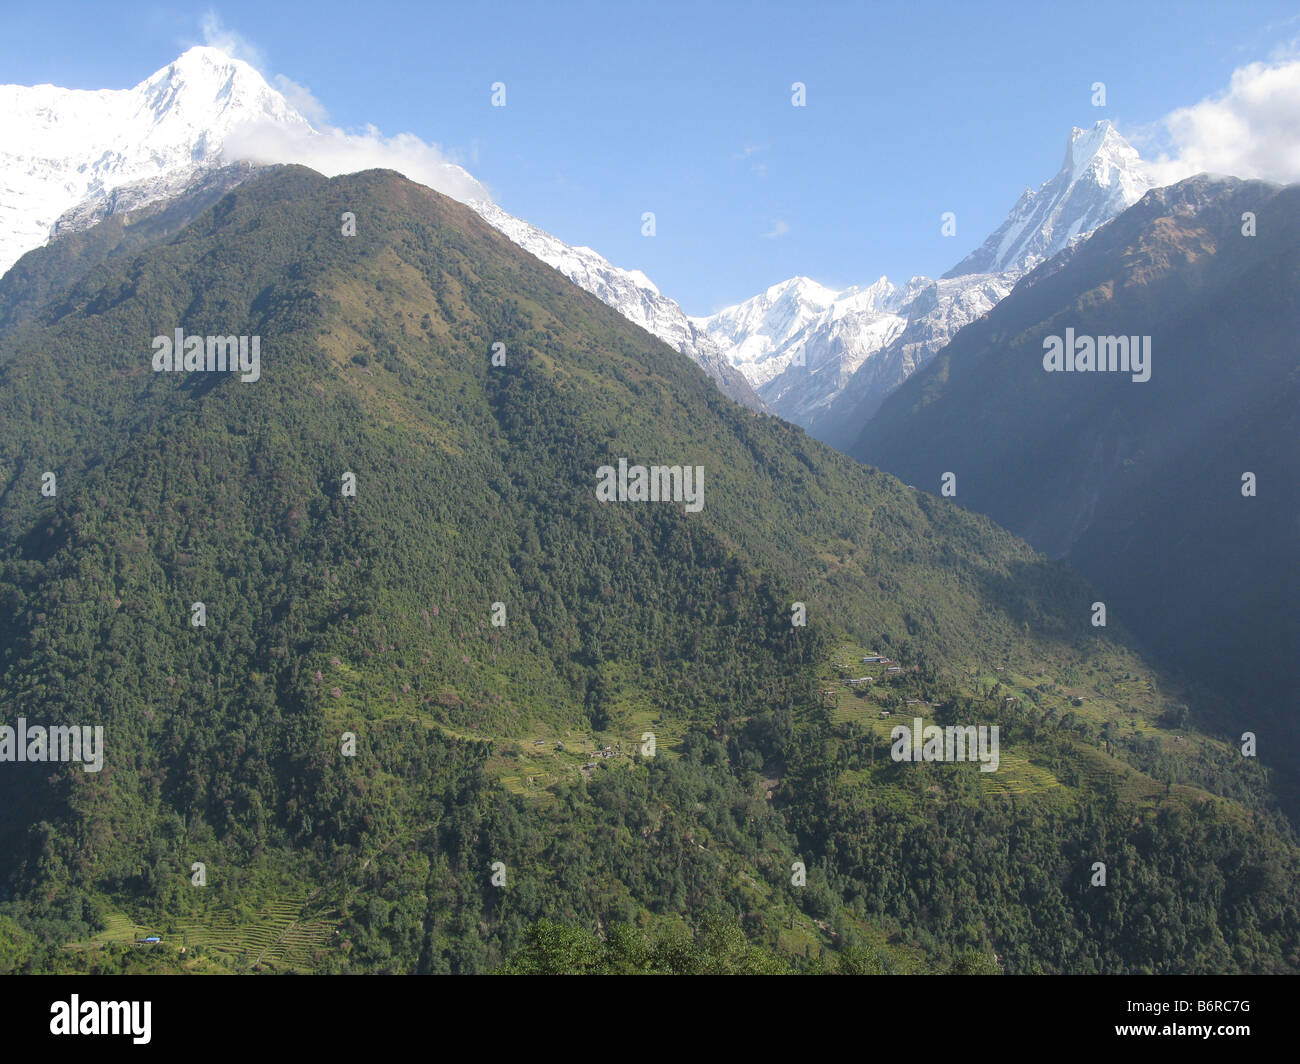 Machapuchare (Fishtail) mountain and Hiun Chuli seen from Chhomrong, Annapurna foothills, Gandaki, Himalayas, Nepal, Asia Stock Photo